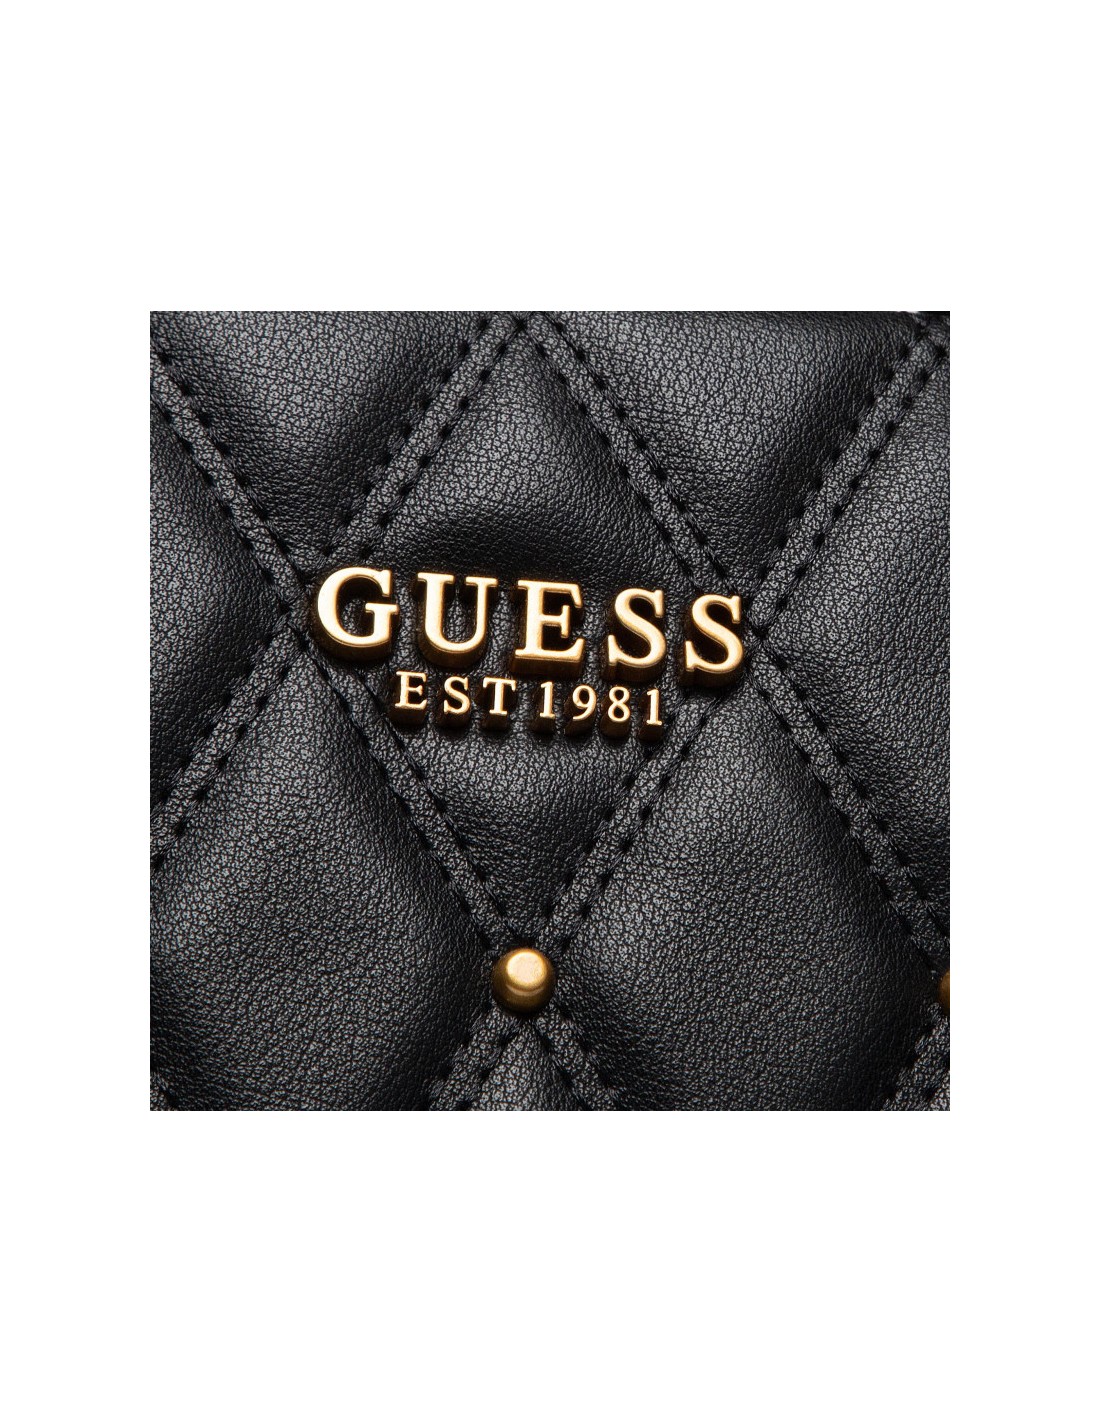 Bolso Guess negro con detalles para mujer. Bolso mujer de marca Guess